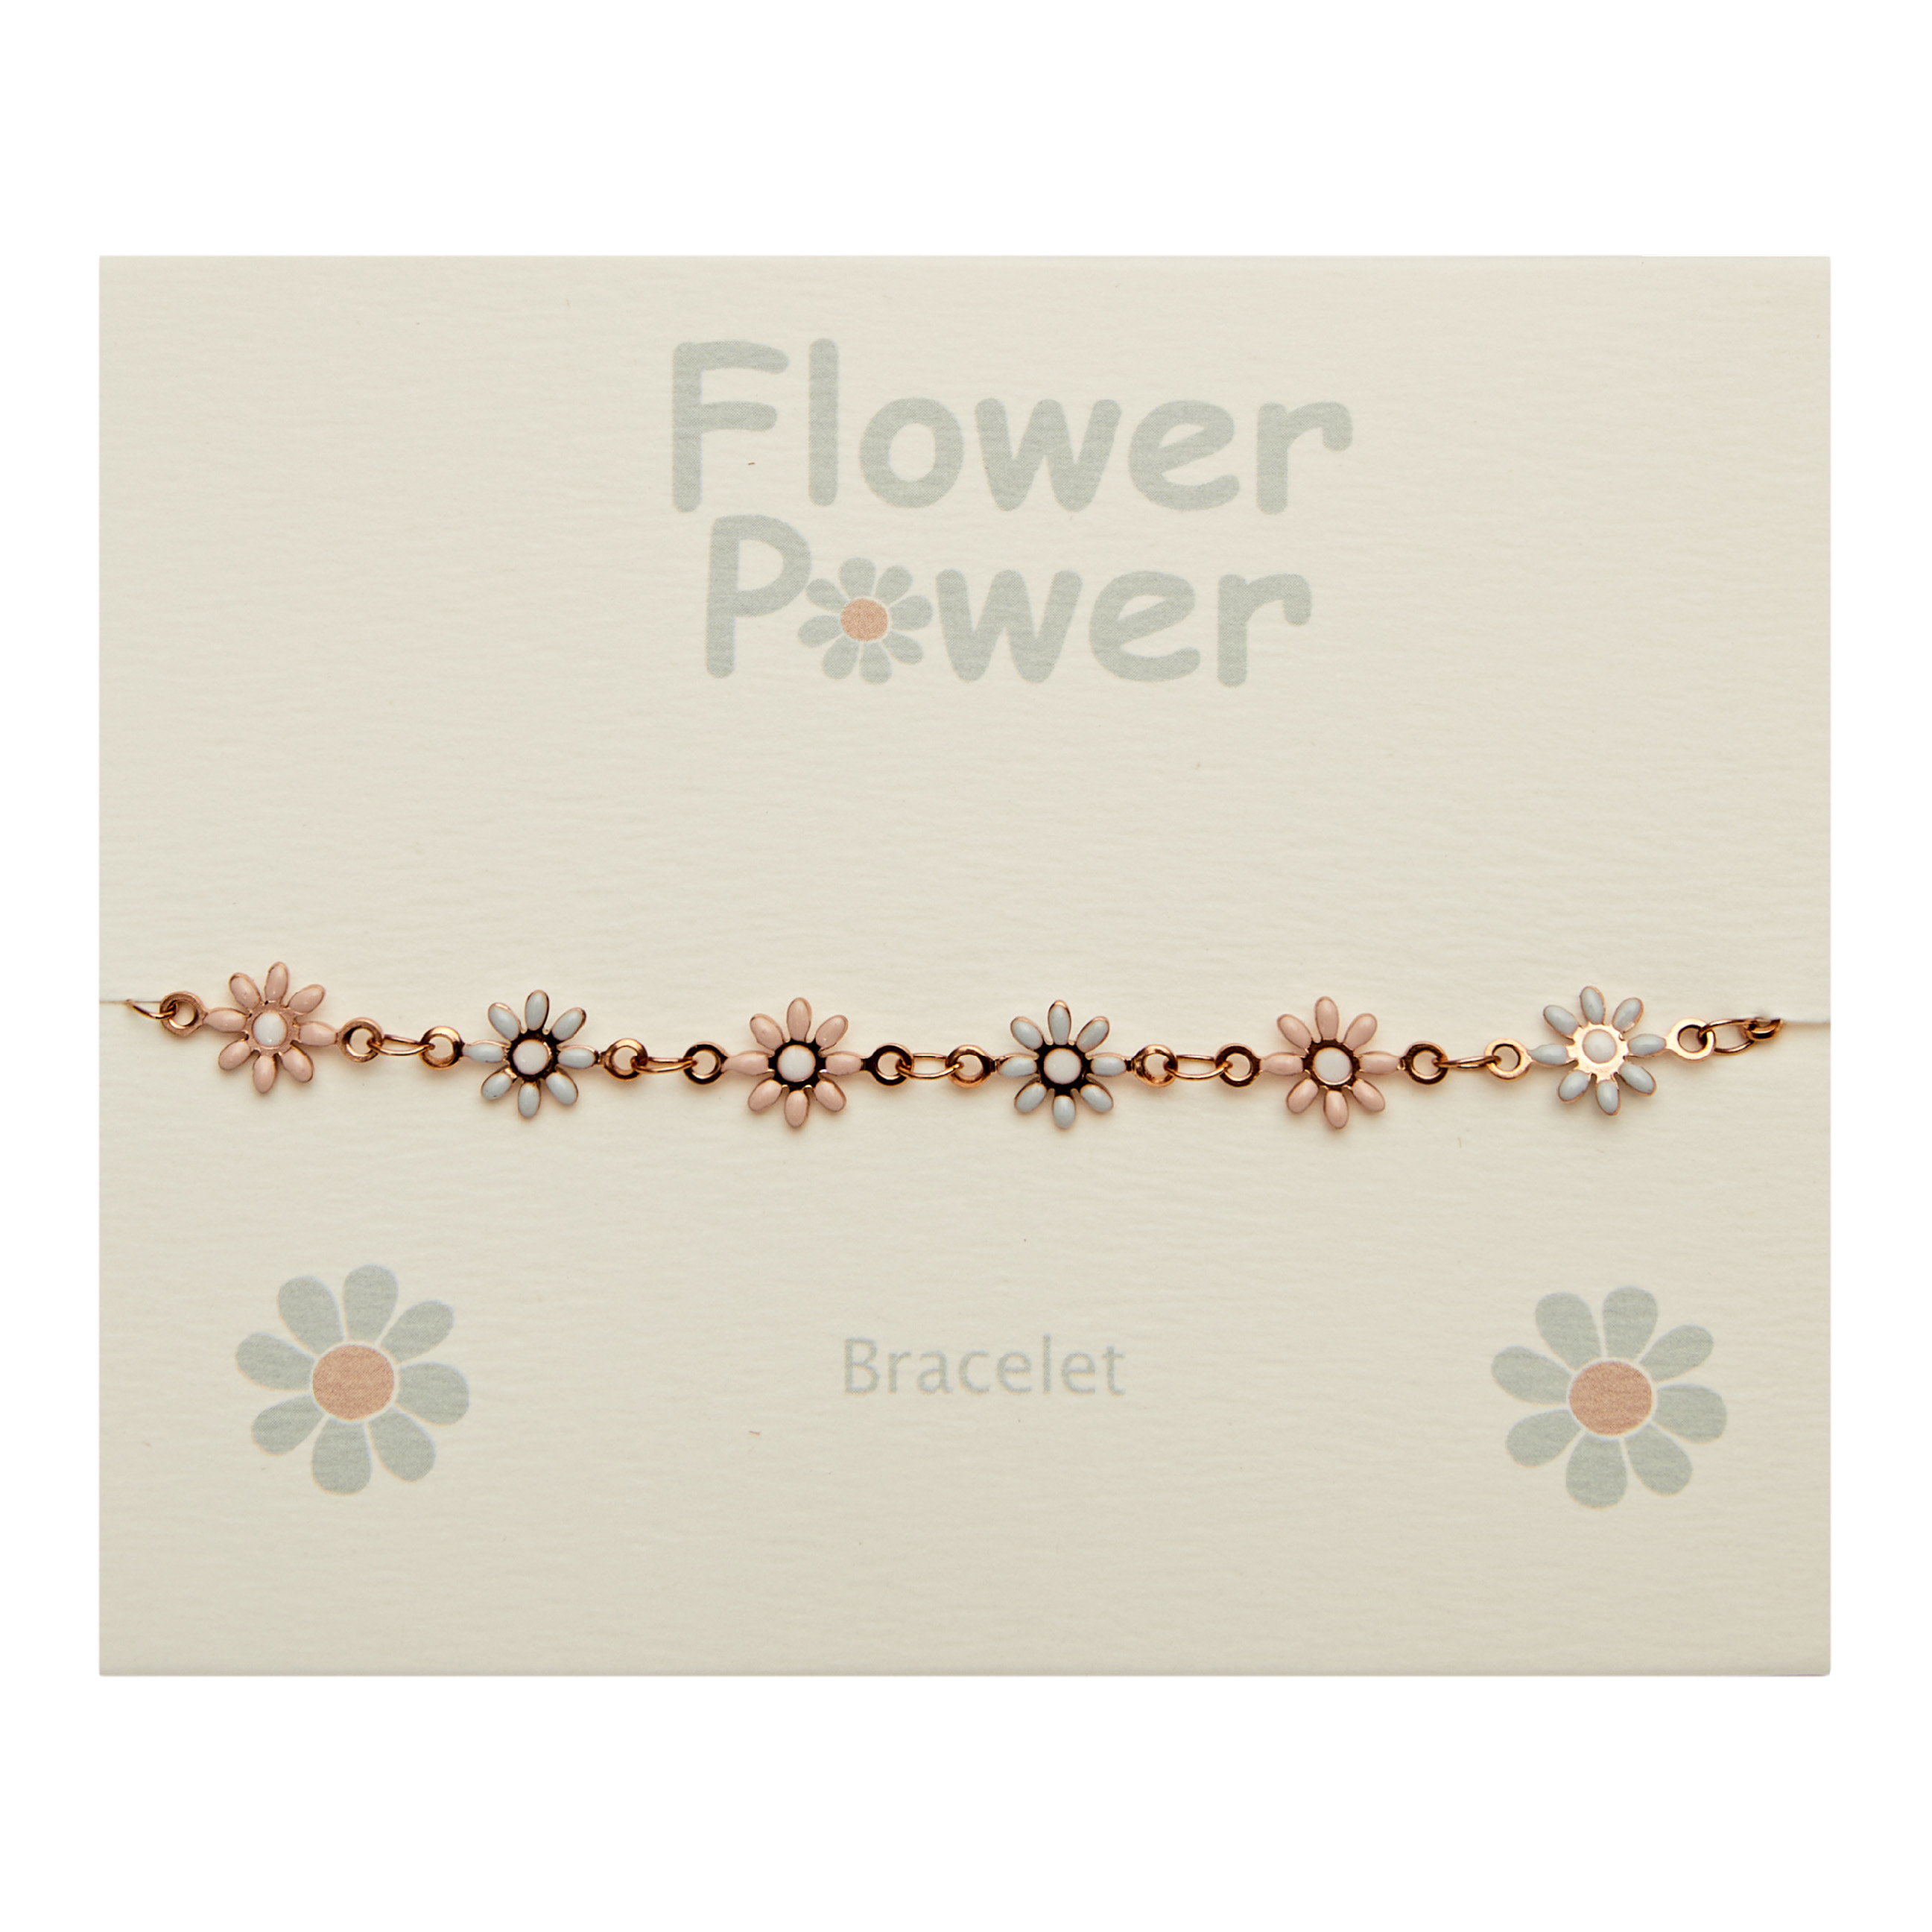 Display bracelets "Flower Power"